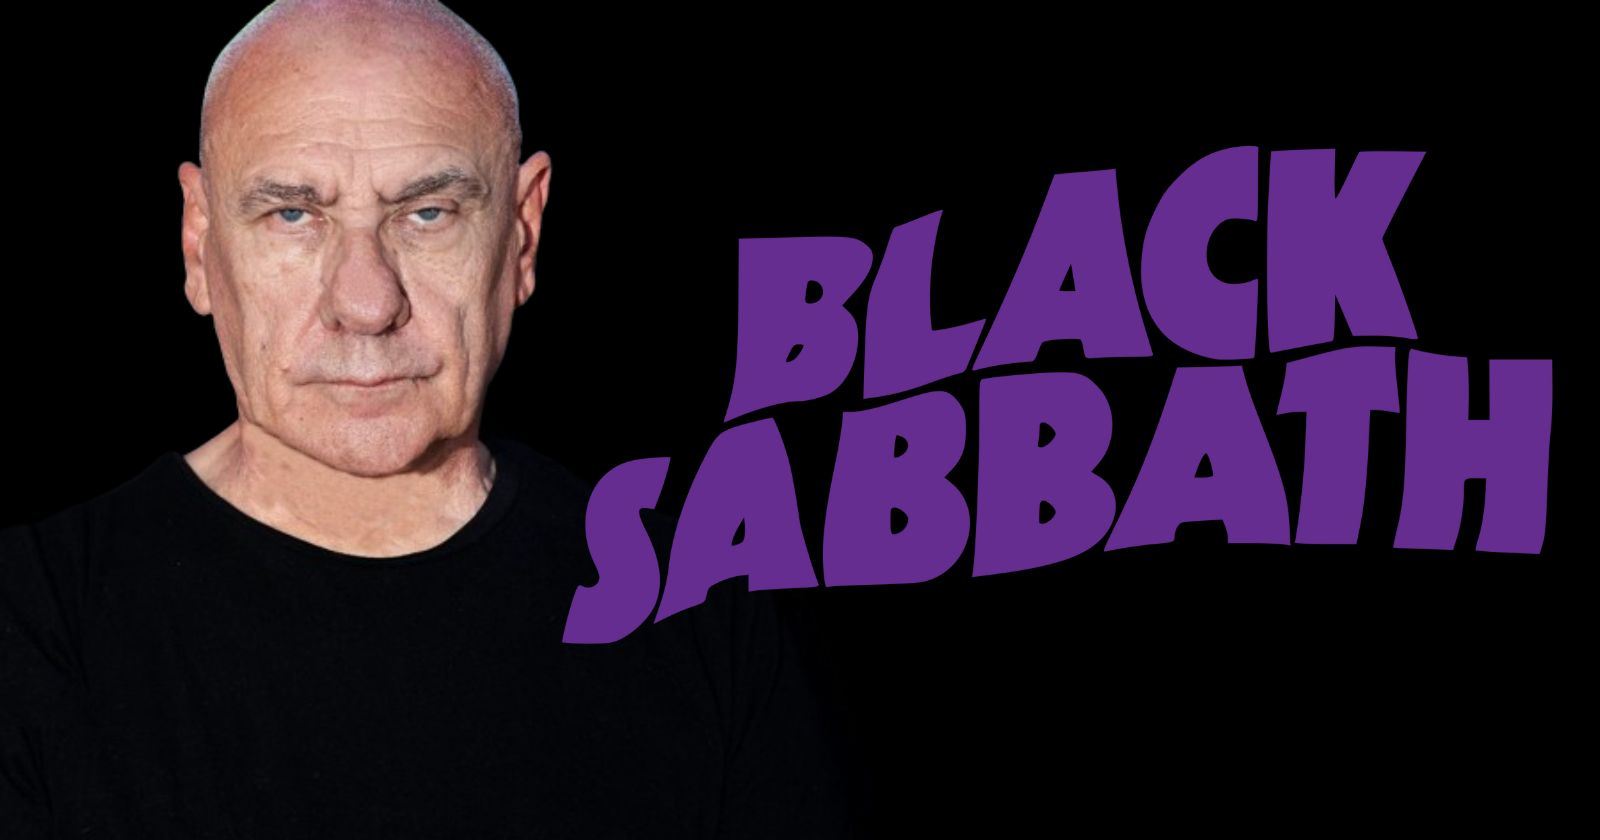 Bill Ward and Black Sabbath's logotype